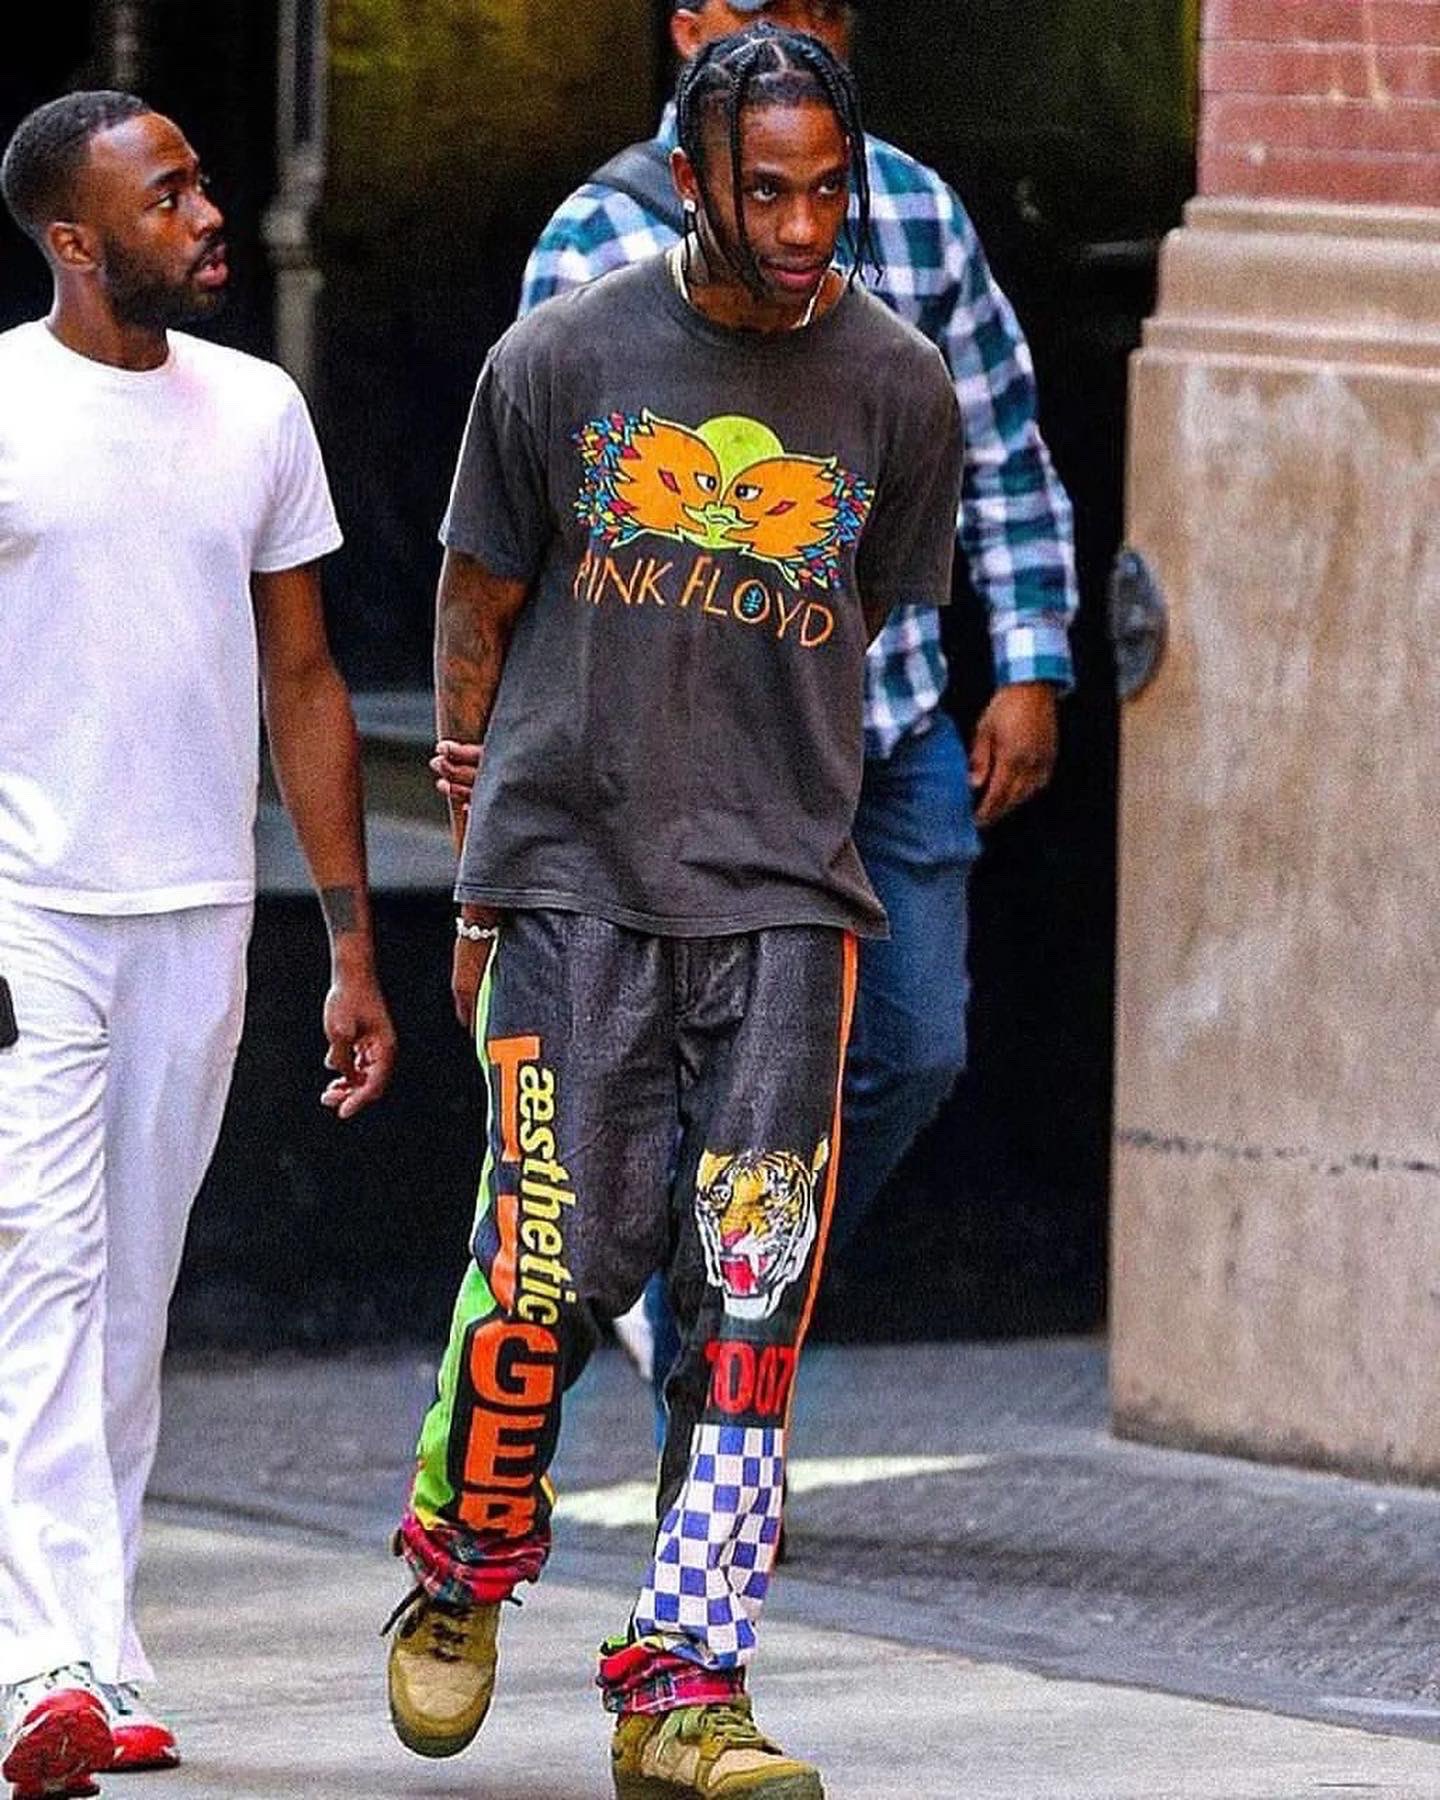 Ovrnundr on Twitter: "Travis spotted wearing the Cactus Plant Flea Market x Nike Dunk Low 🌵 https://t.co/3IJqc5KZQR" / Twitter